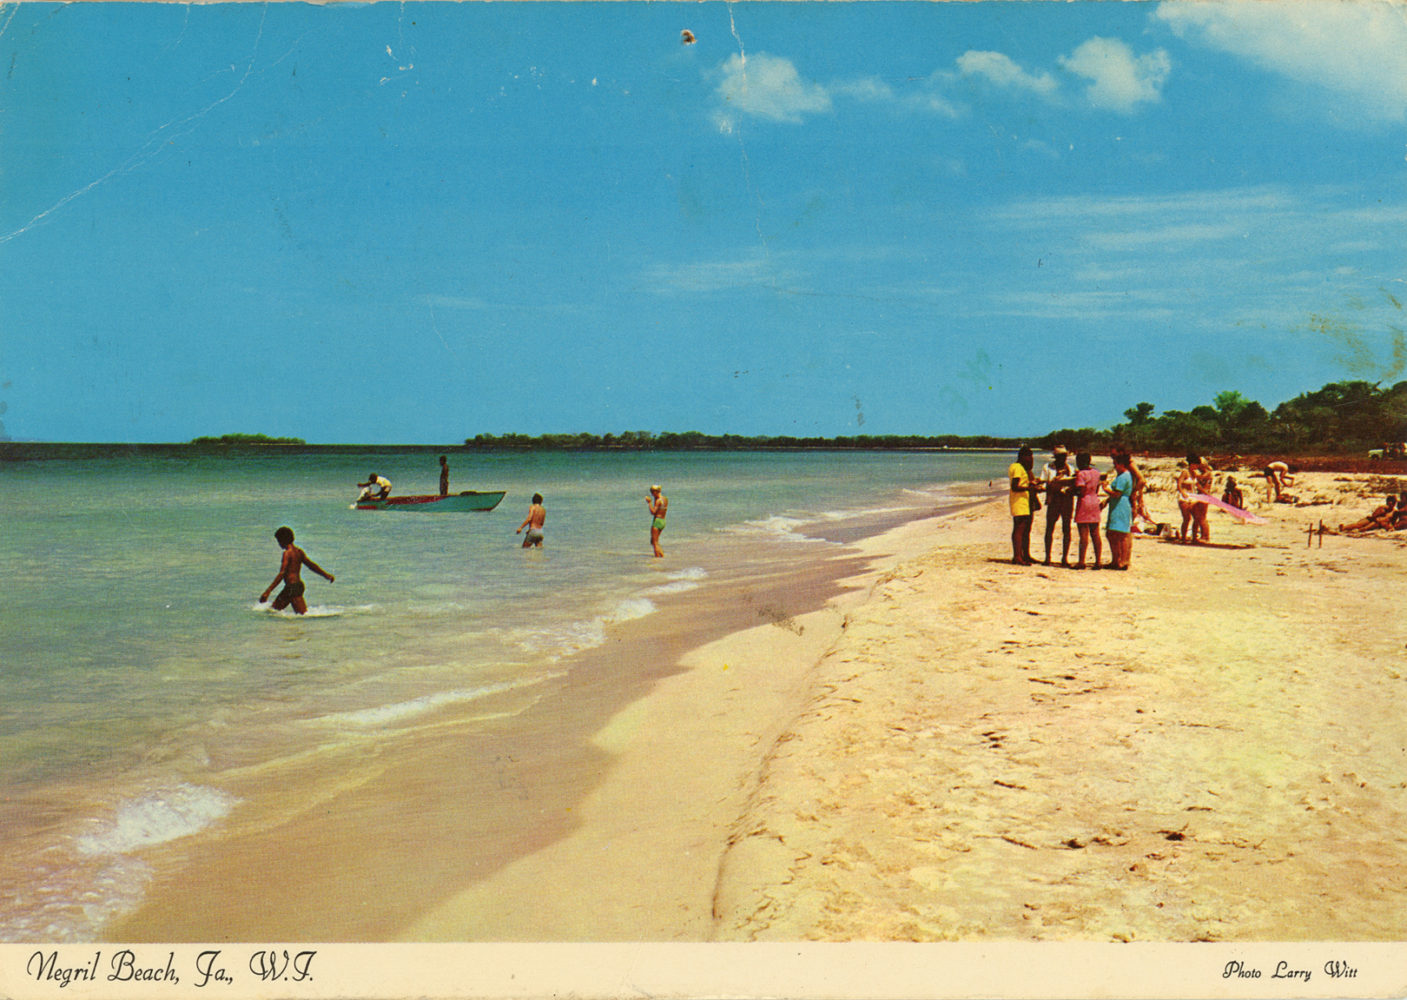 Postcard from Steve Hoy in Jamaica